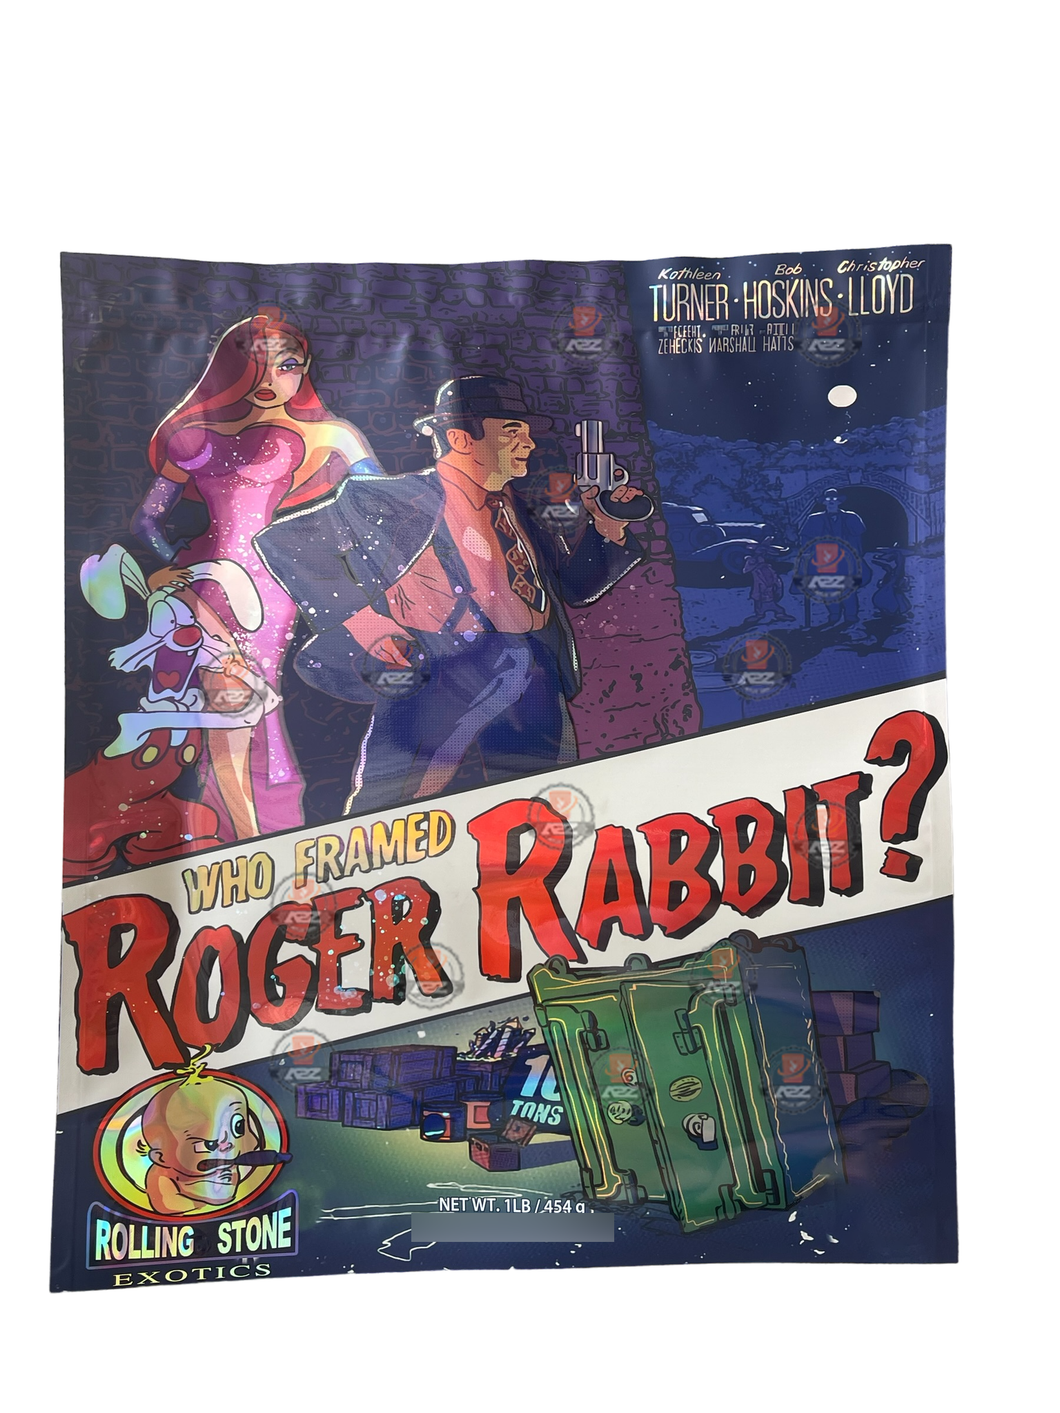 Roger Rabbit Mylar Bag (Large) 1 LBS - 16OZ (454g) Pound Bag Rolling Stone